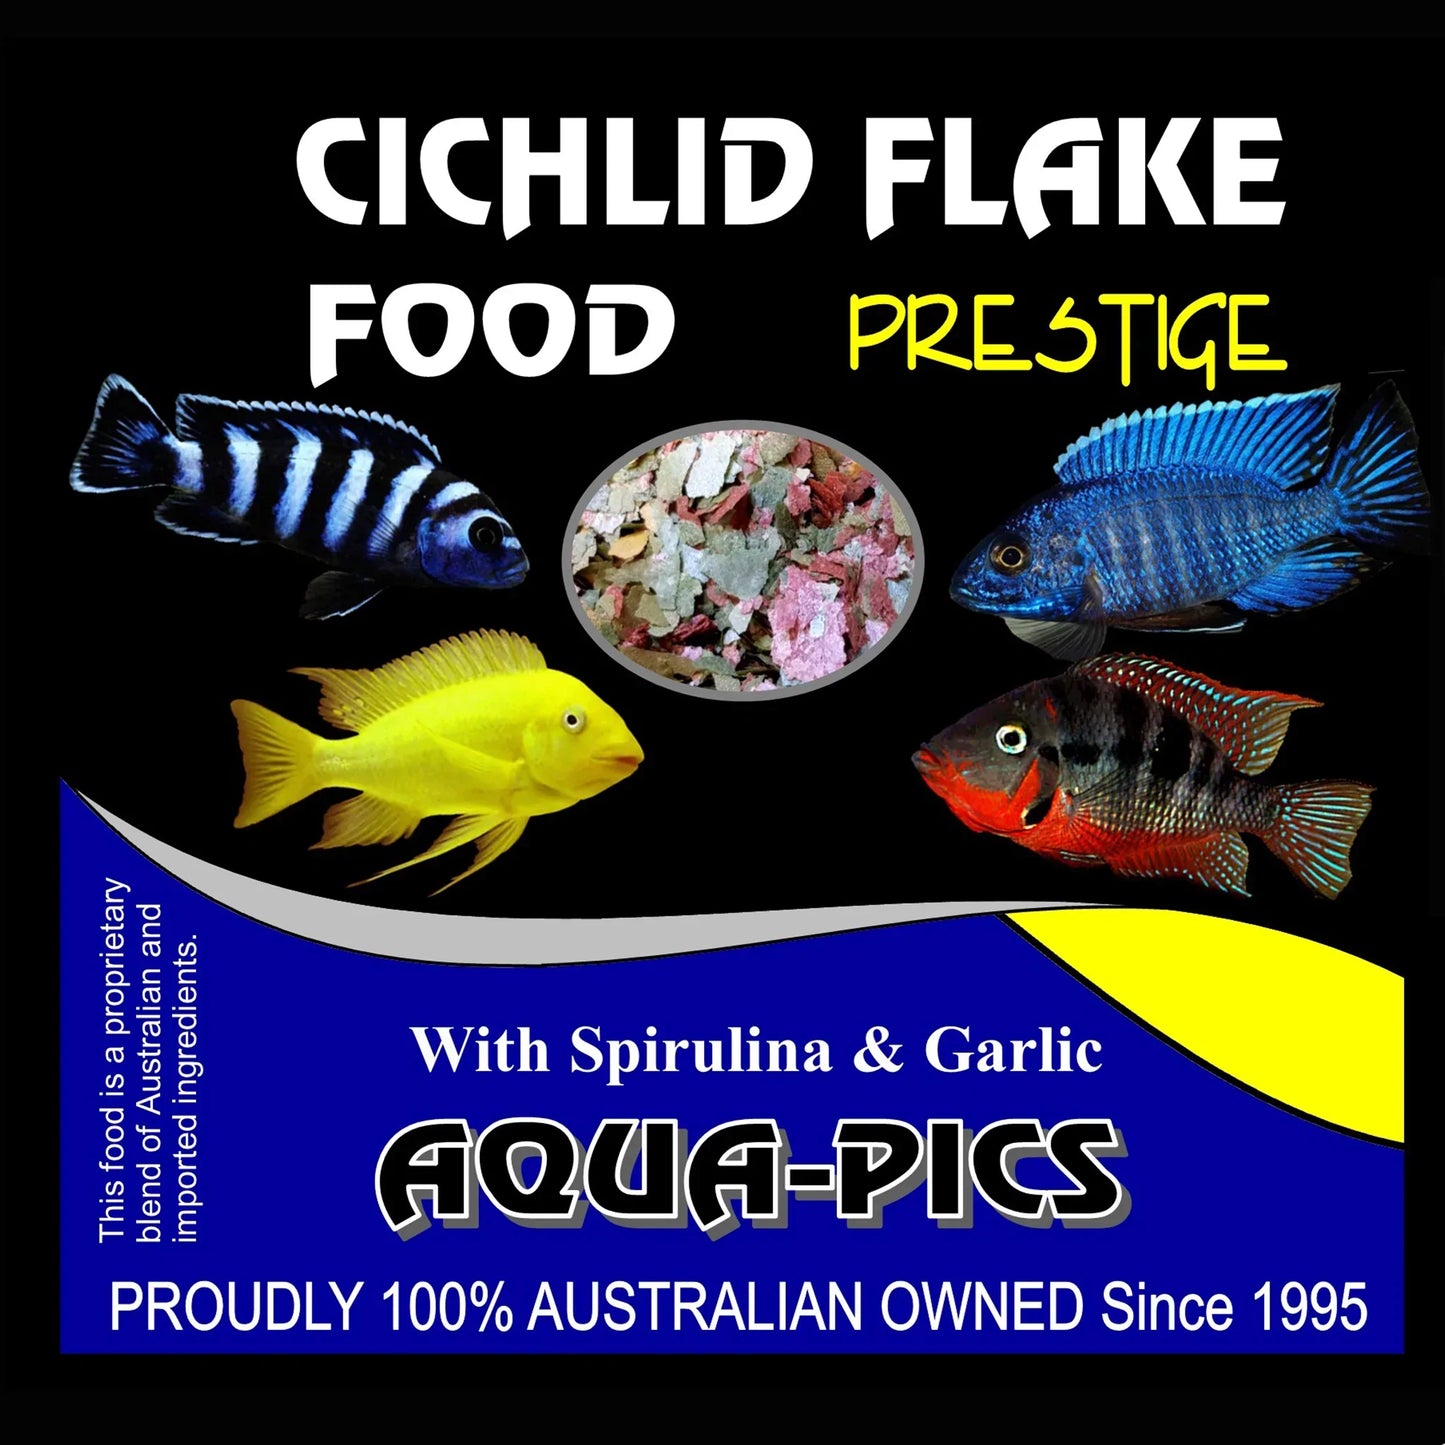 Flake Food Premium Cichlid 200g